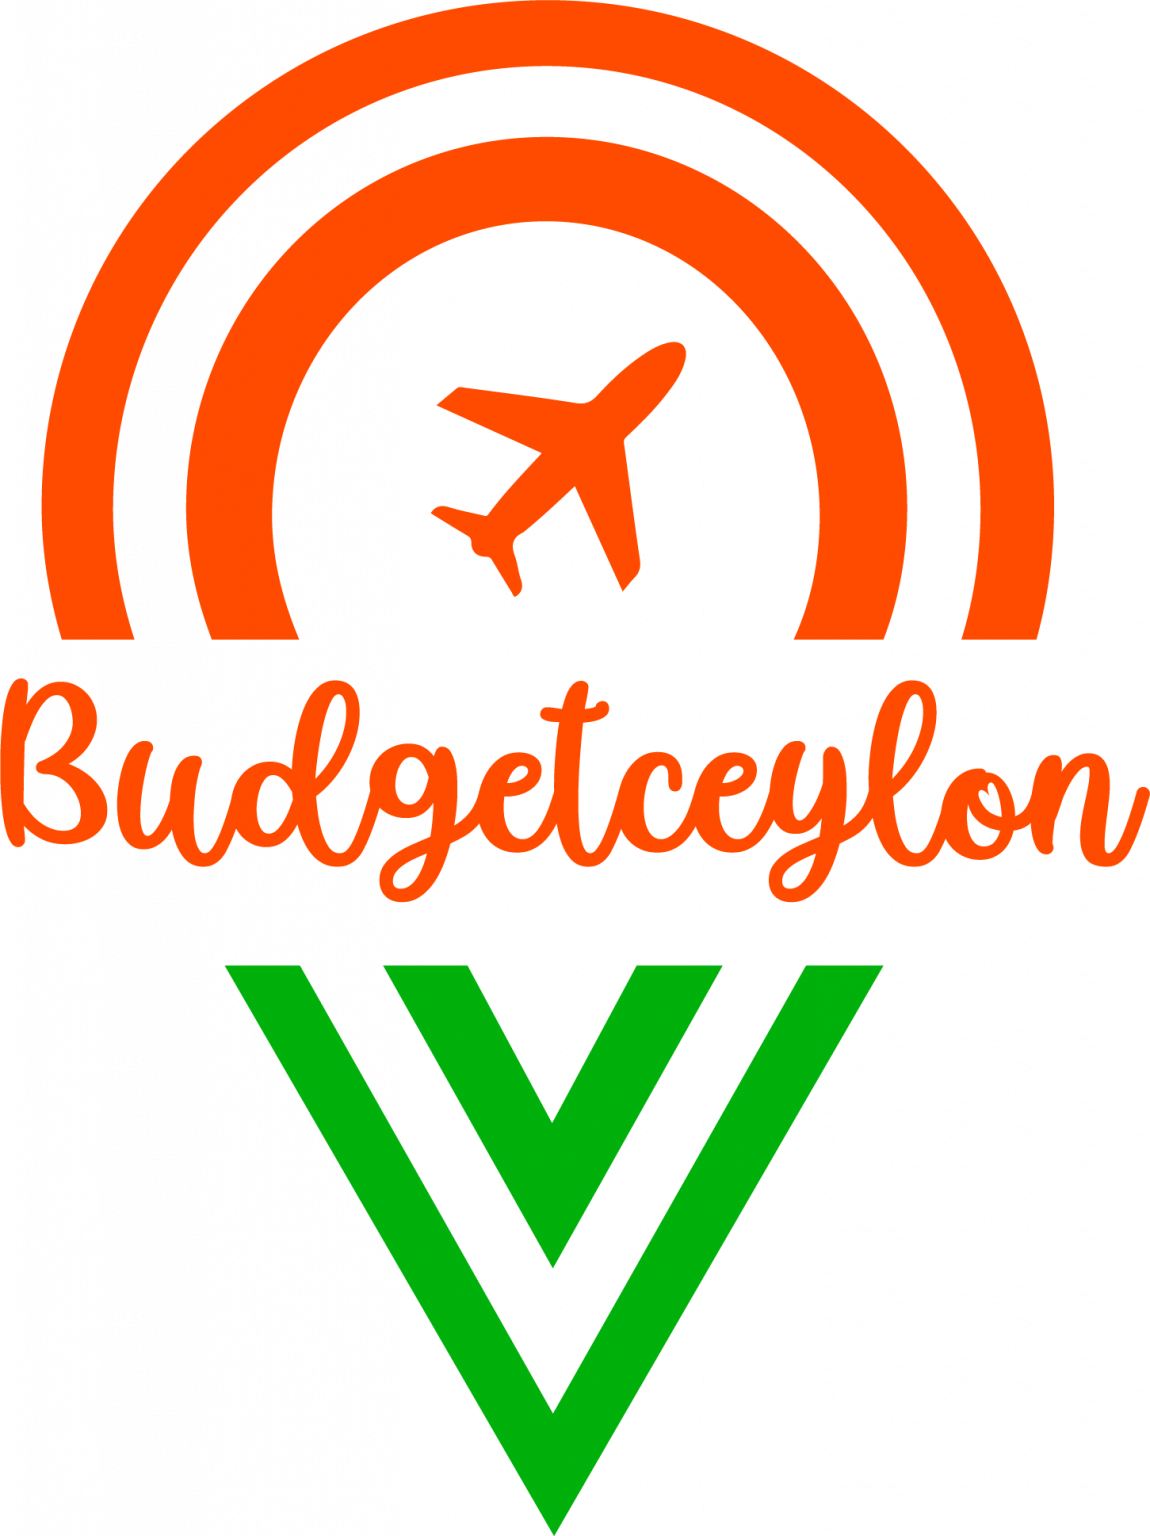 Budget Ceylon